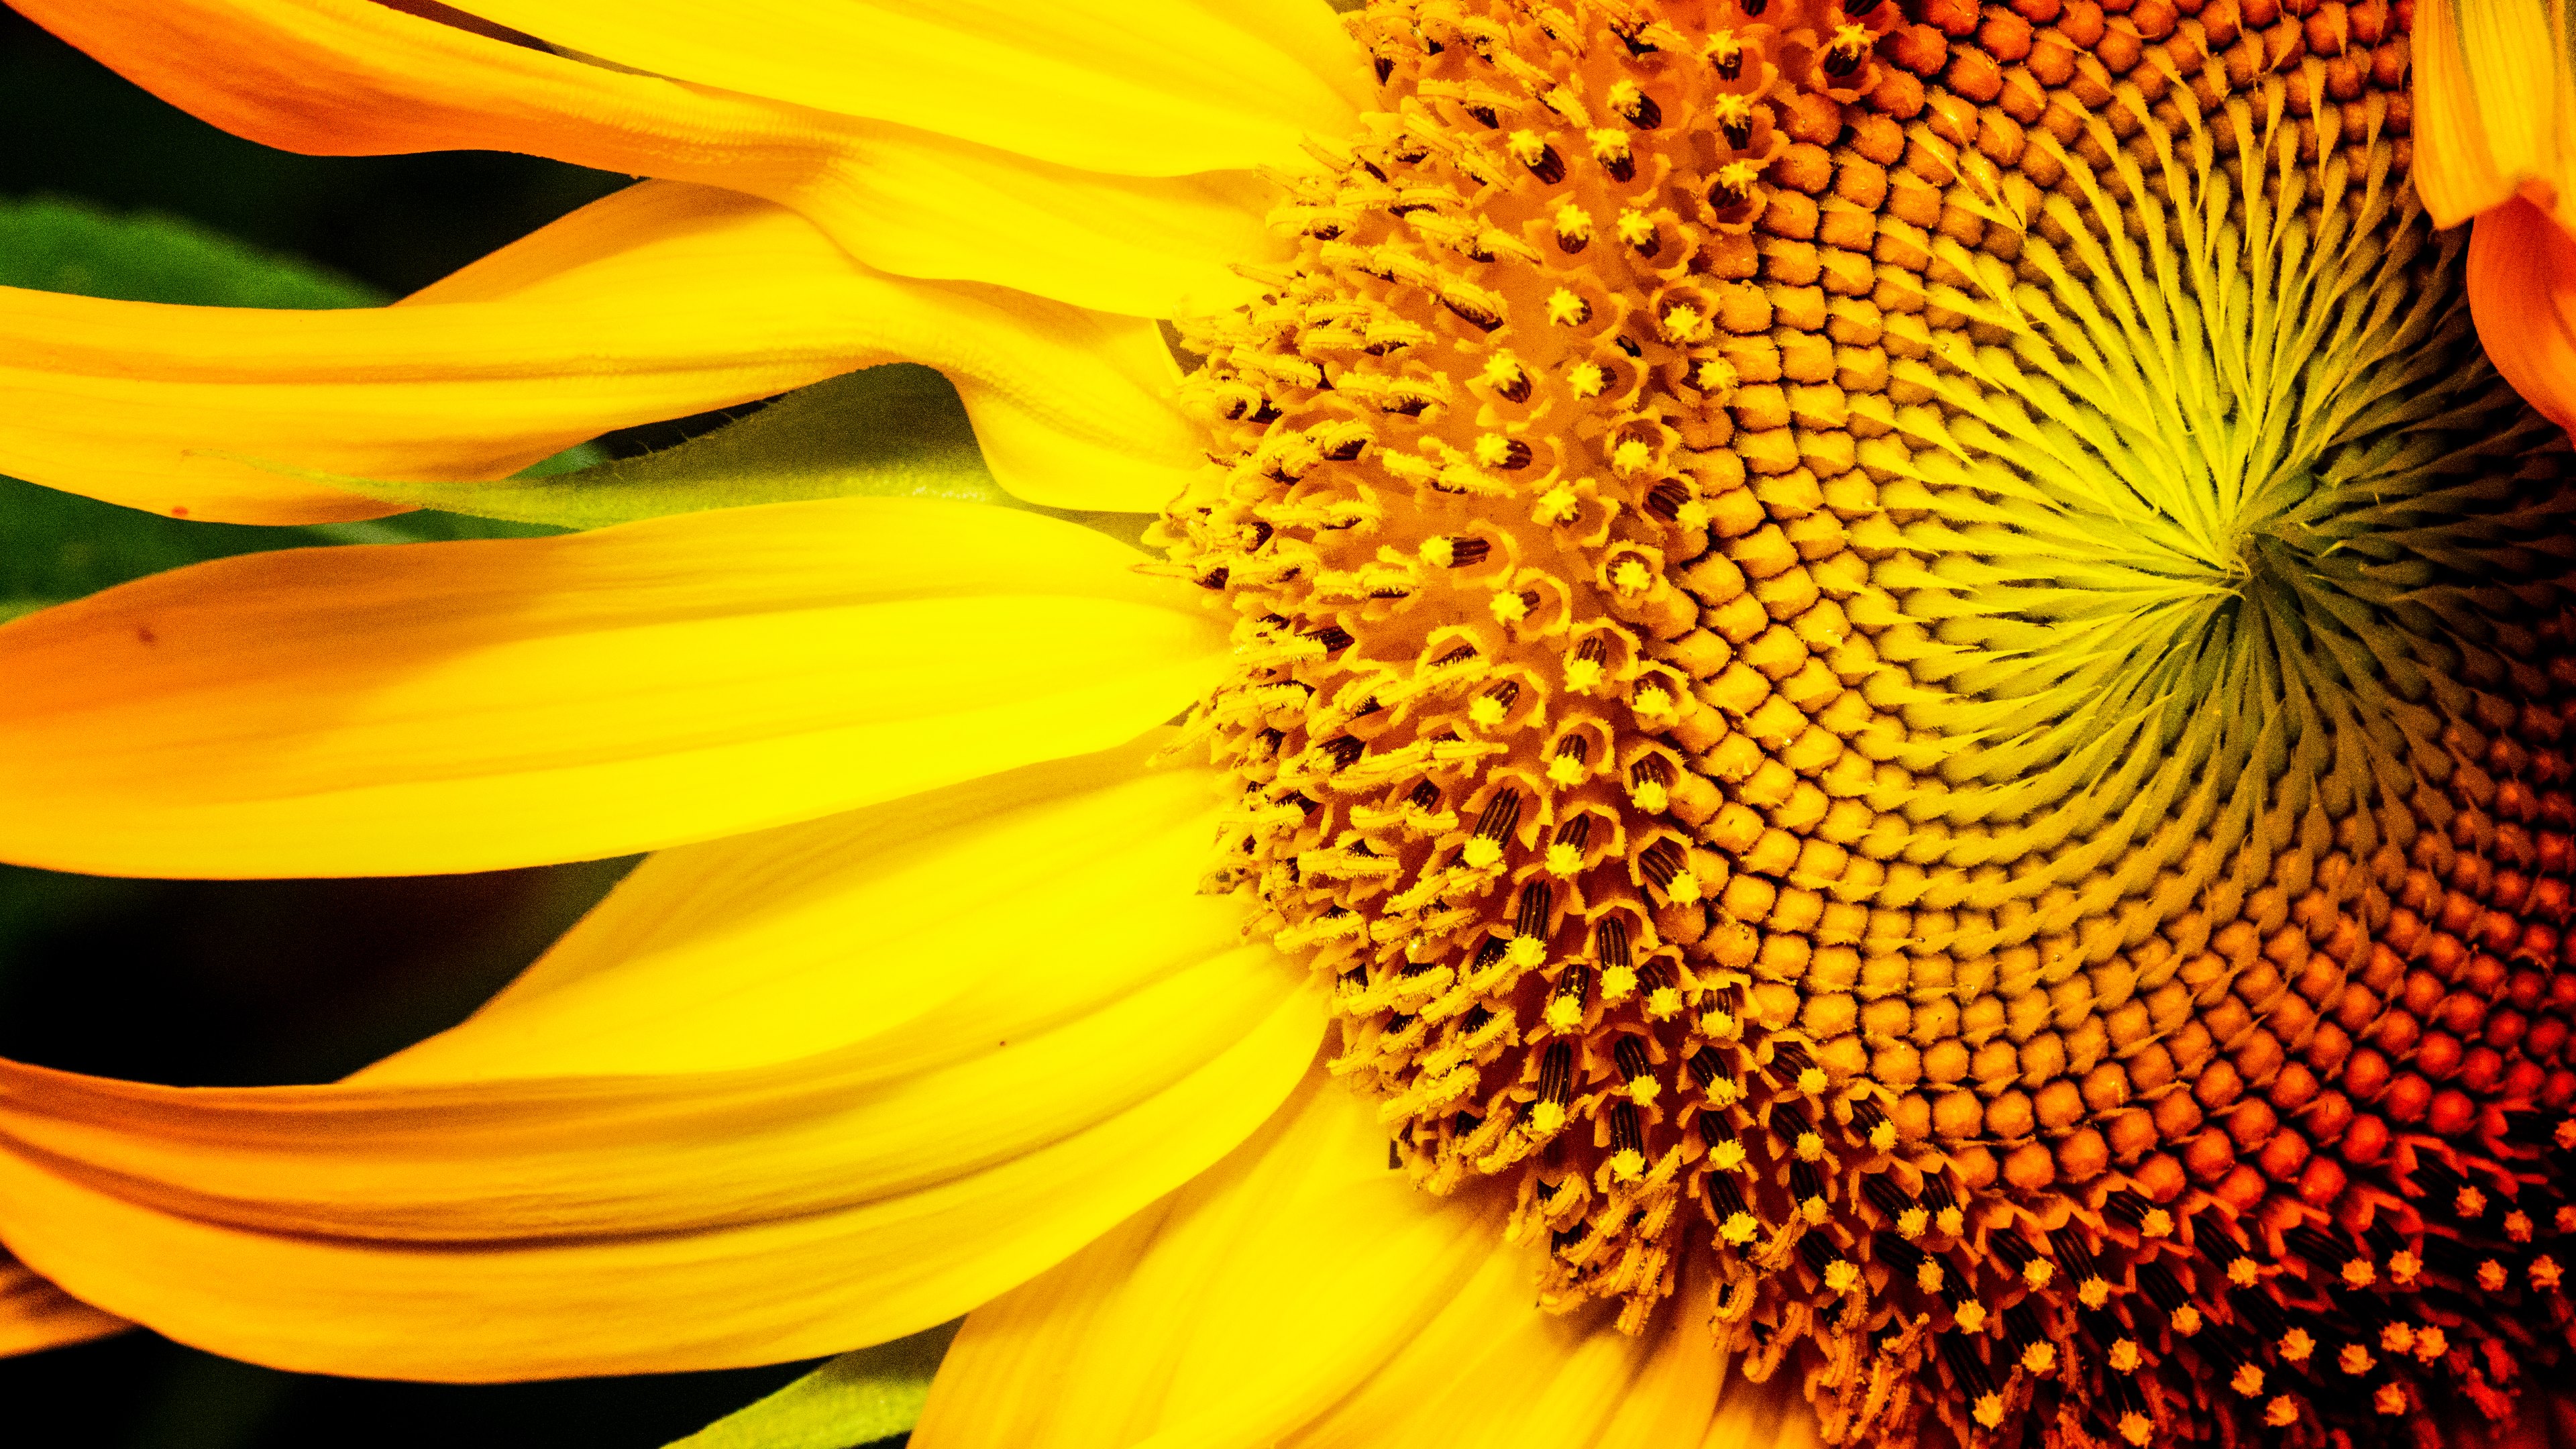 Sunflower 4k Ultra Hd Wallpaper Background Image 3840x2160